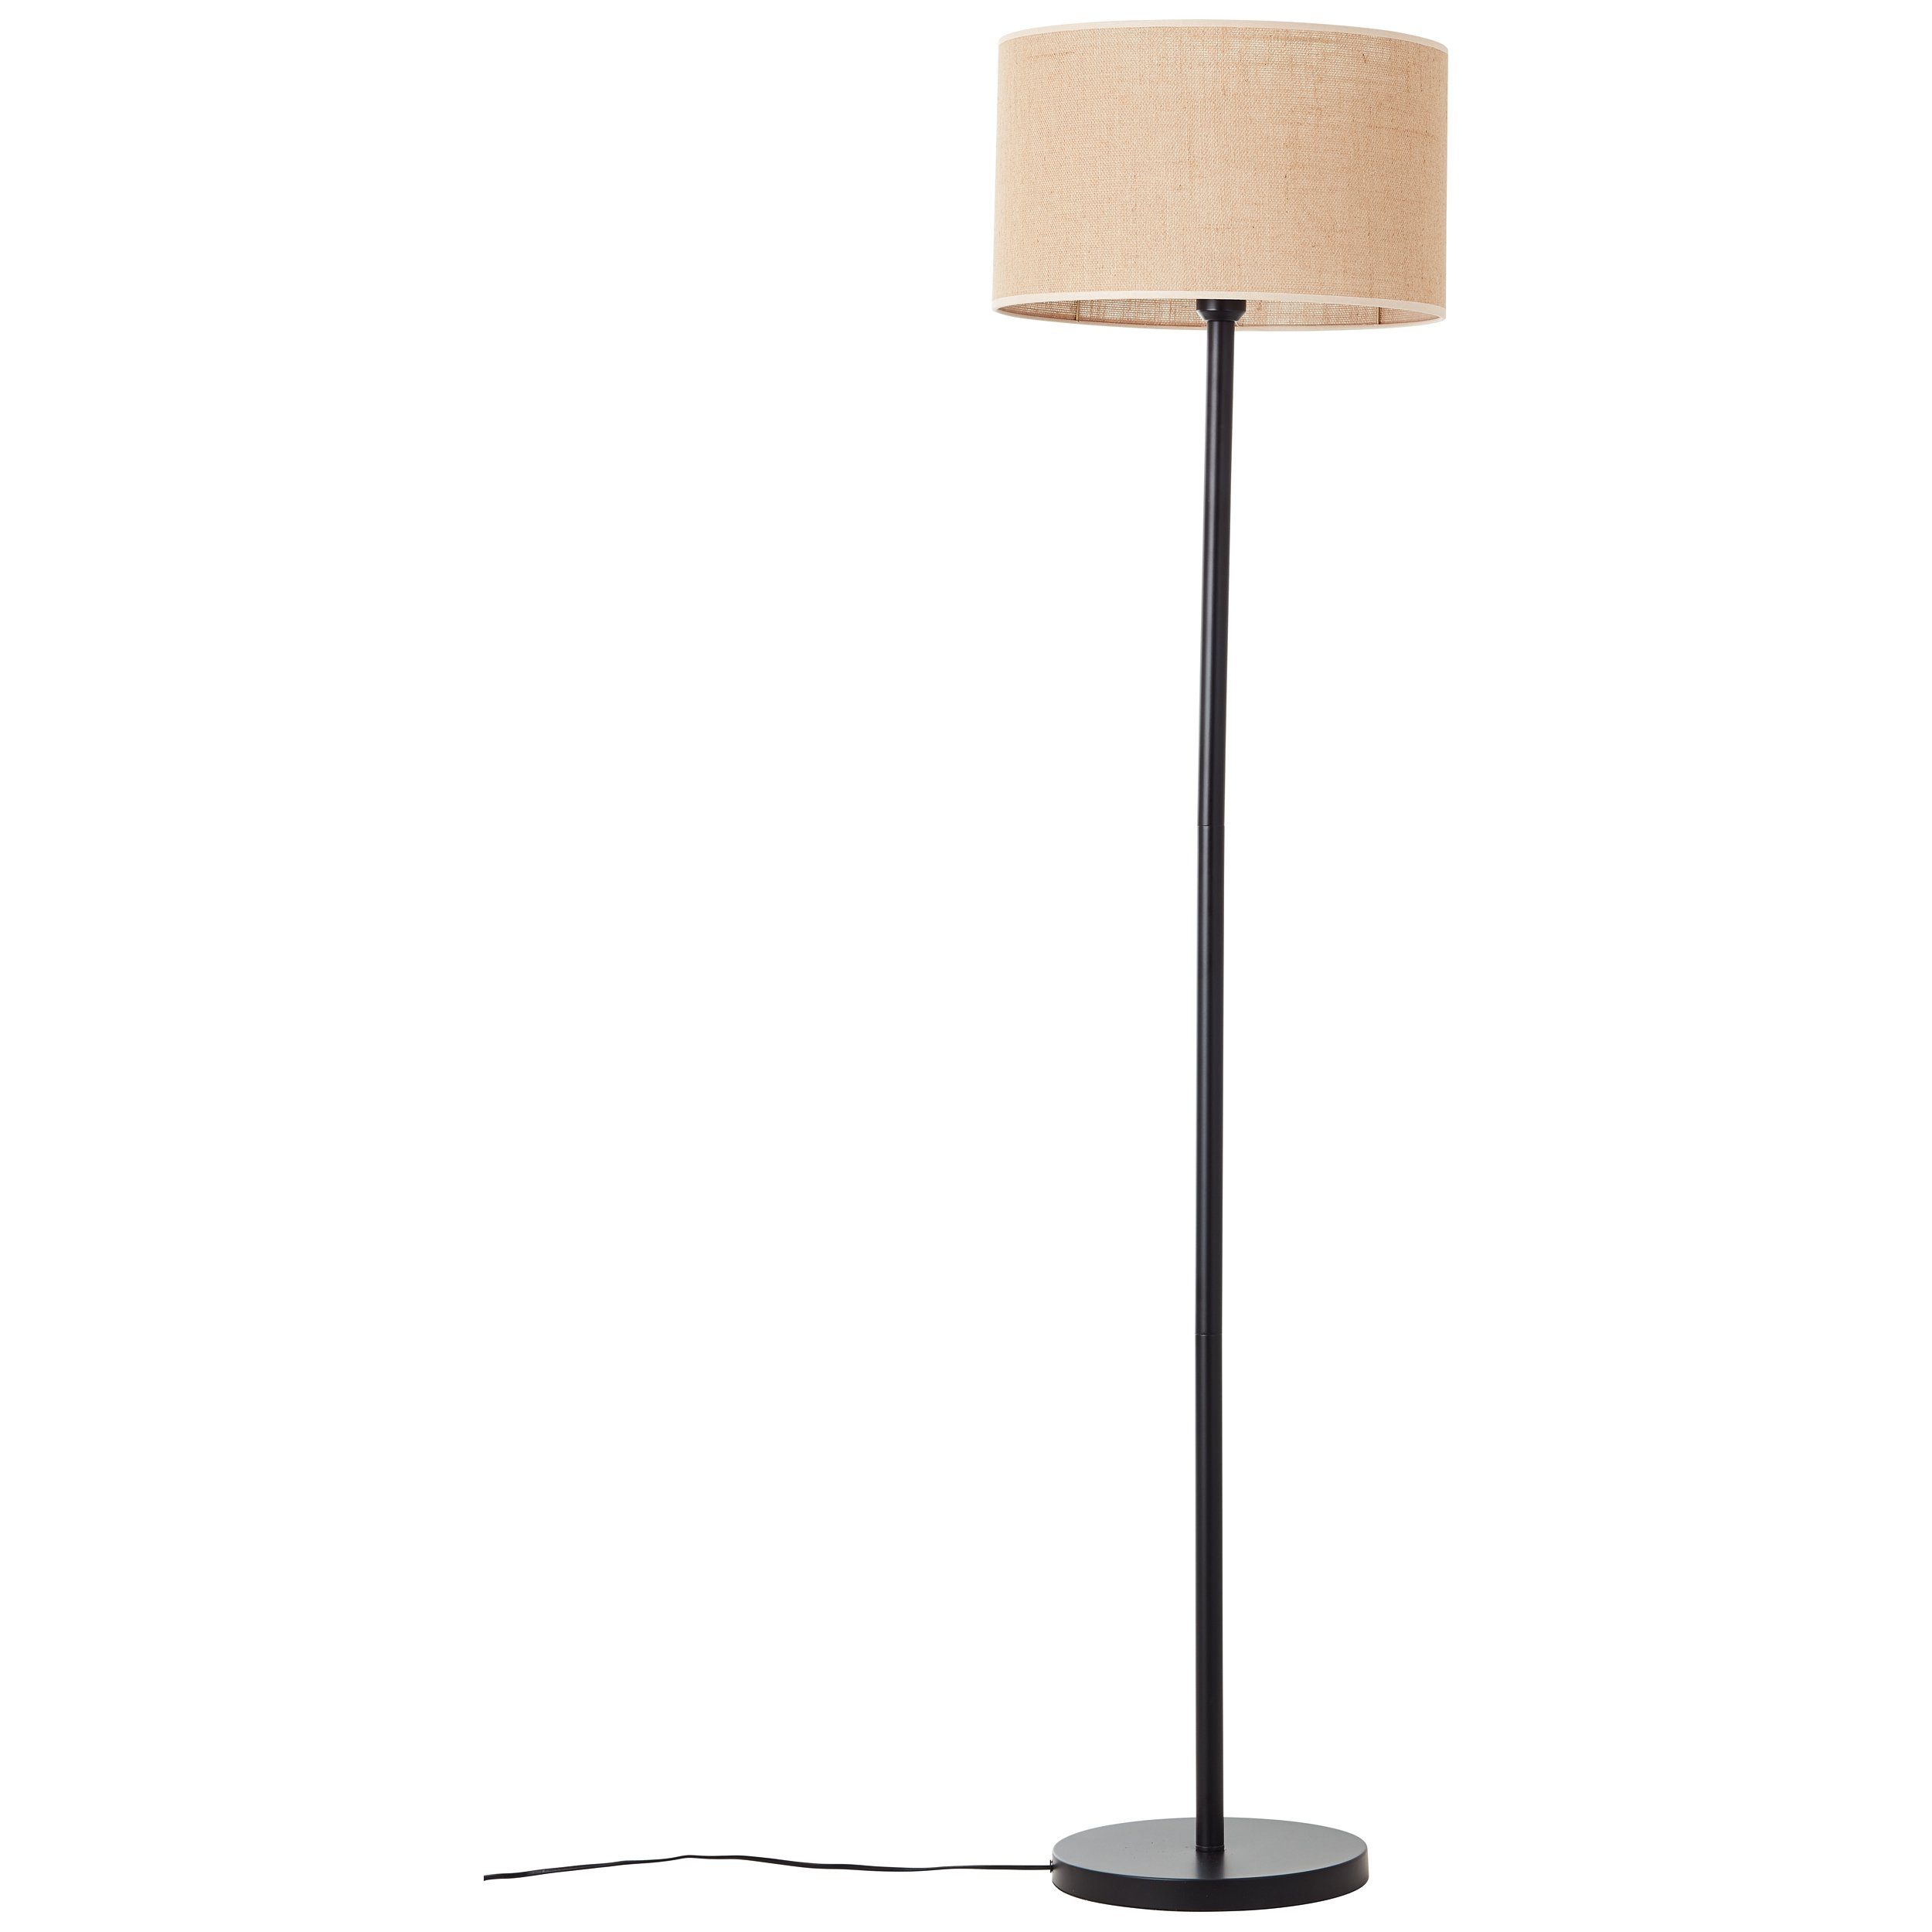 Brilliant Stehlampe Aniela, W Standleuchte A60, 40 E27, schwarz/natur, 1x Metall/Textil, Aniela